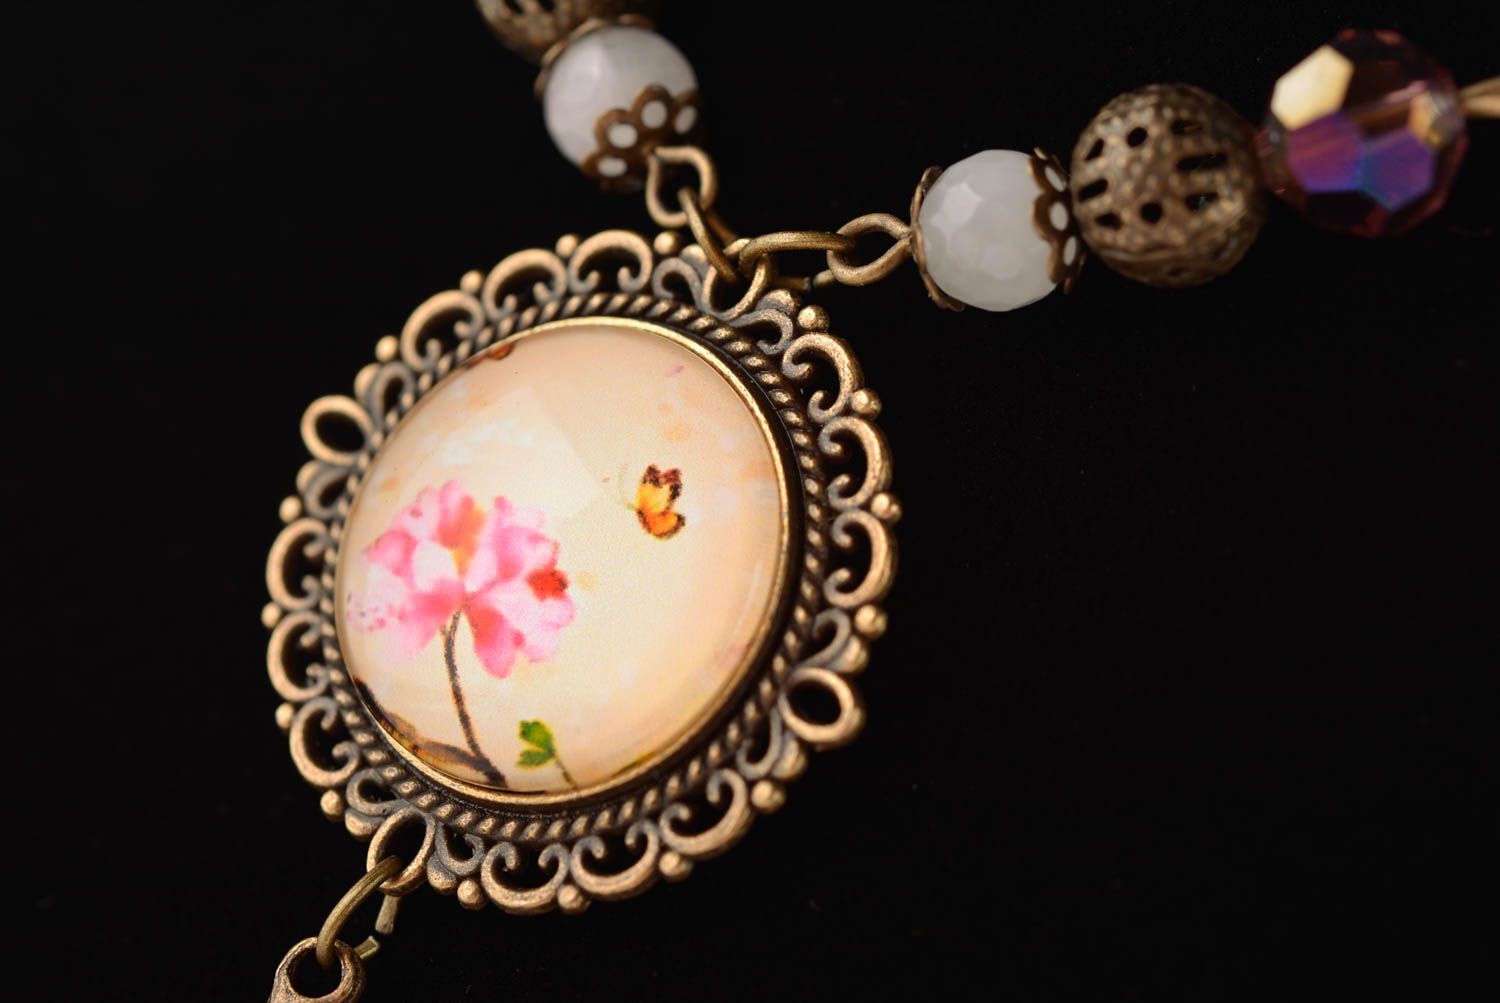 Unusual handmade glass pendant metal necklace metal jewelry designs gift ideas photo 2